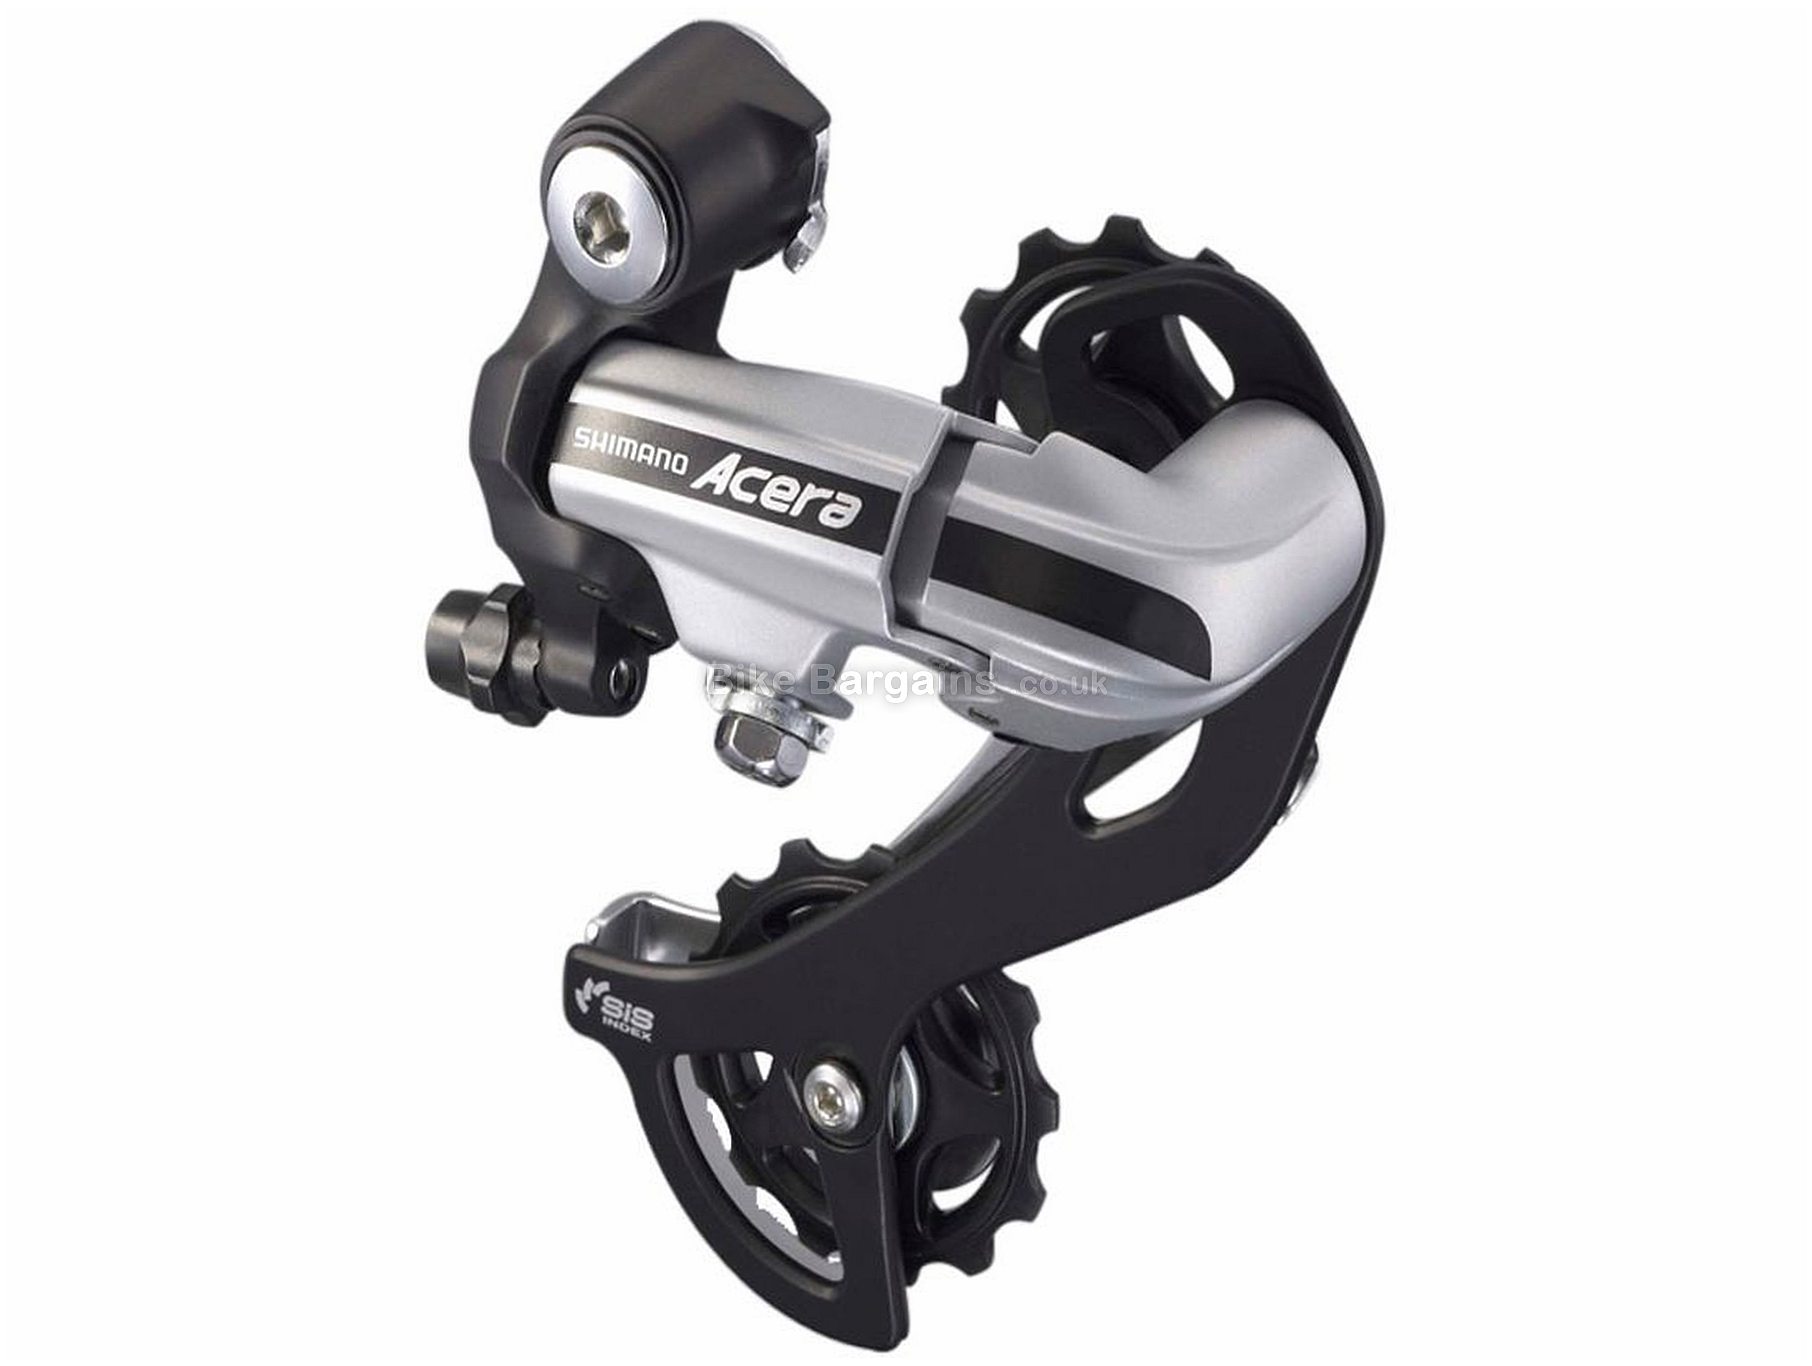 acera gear cycle